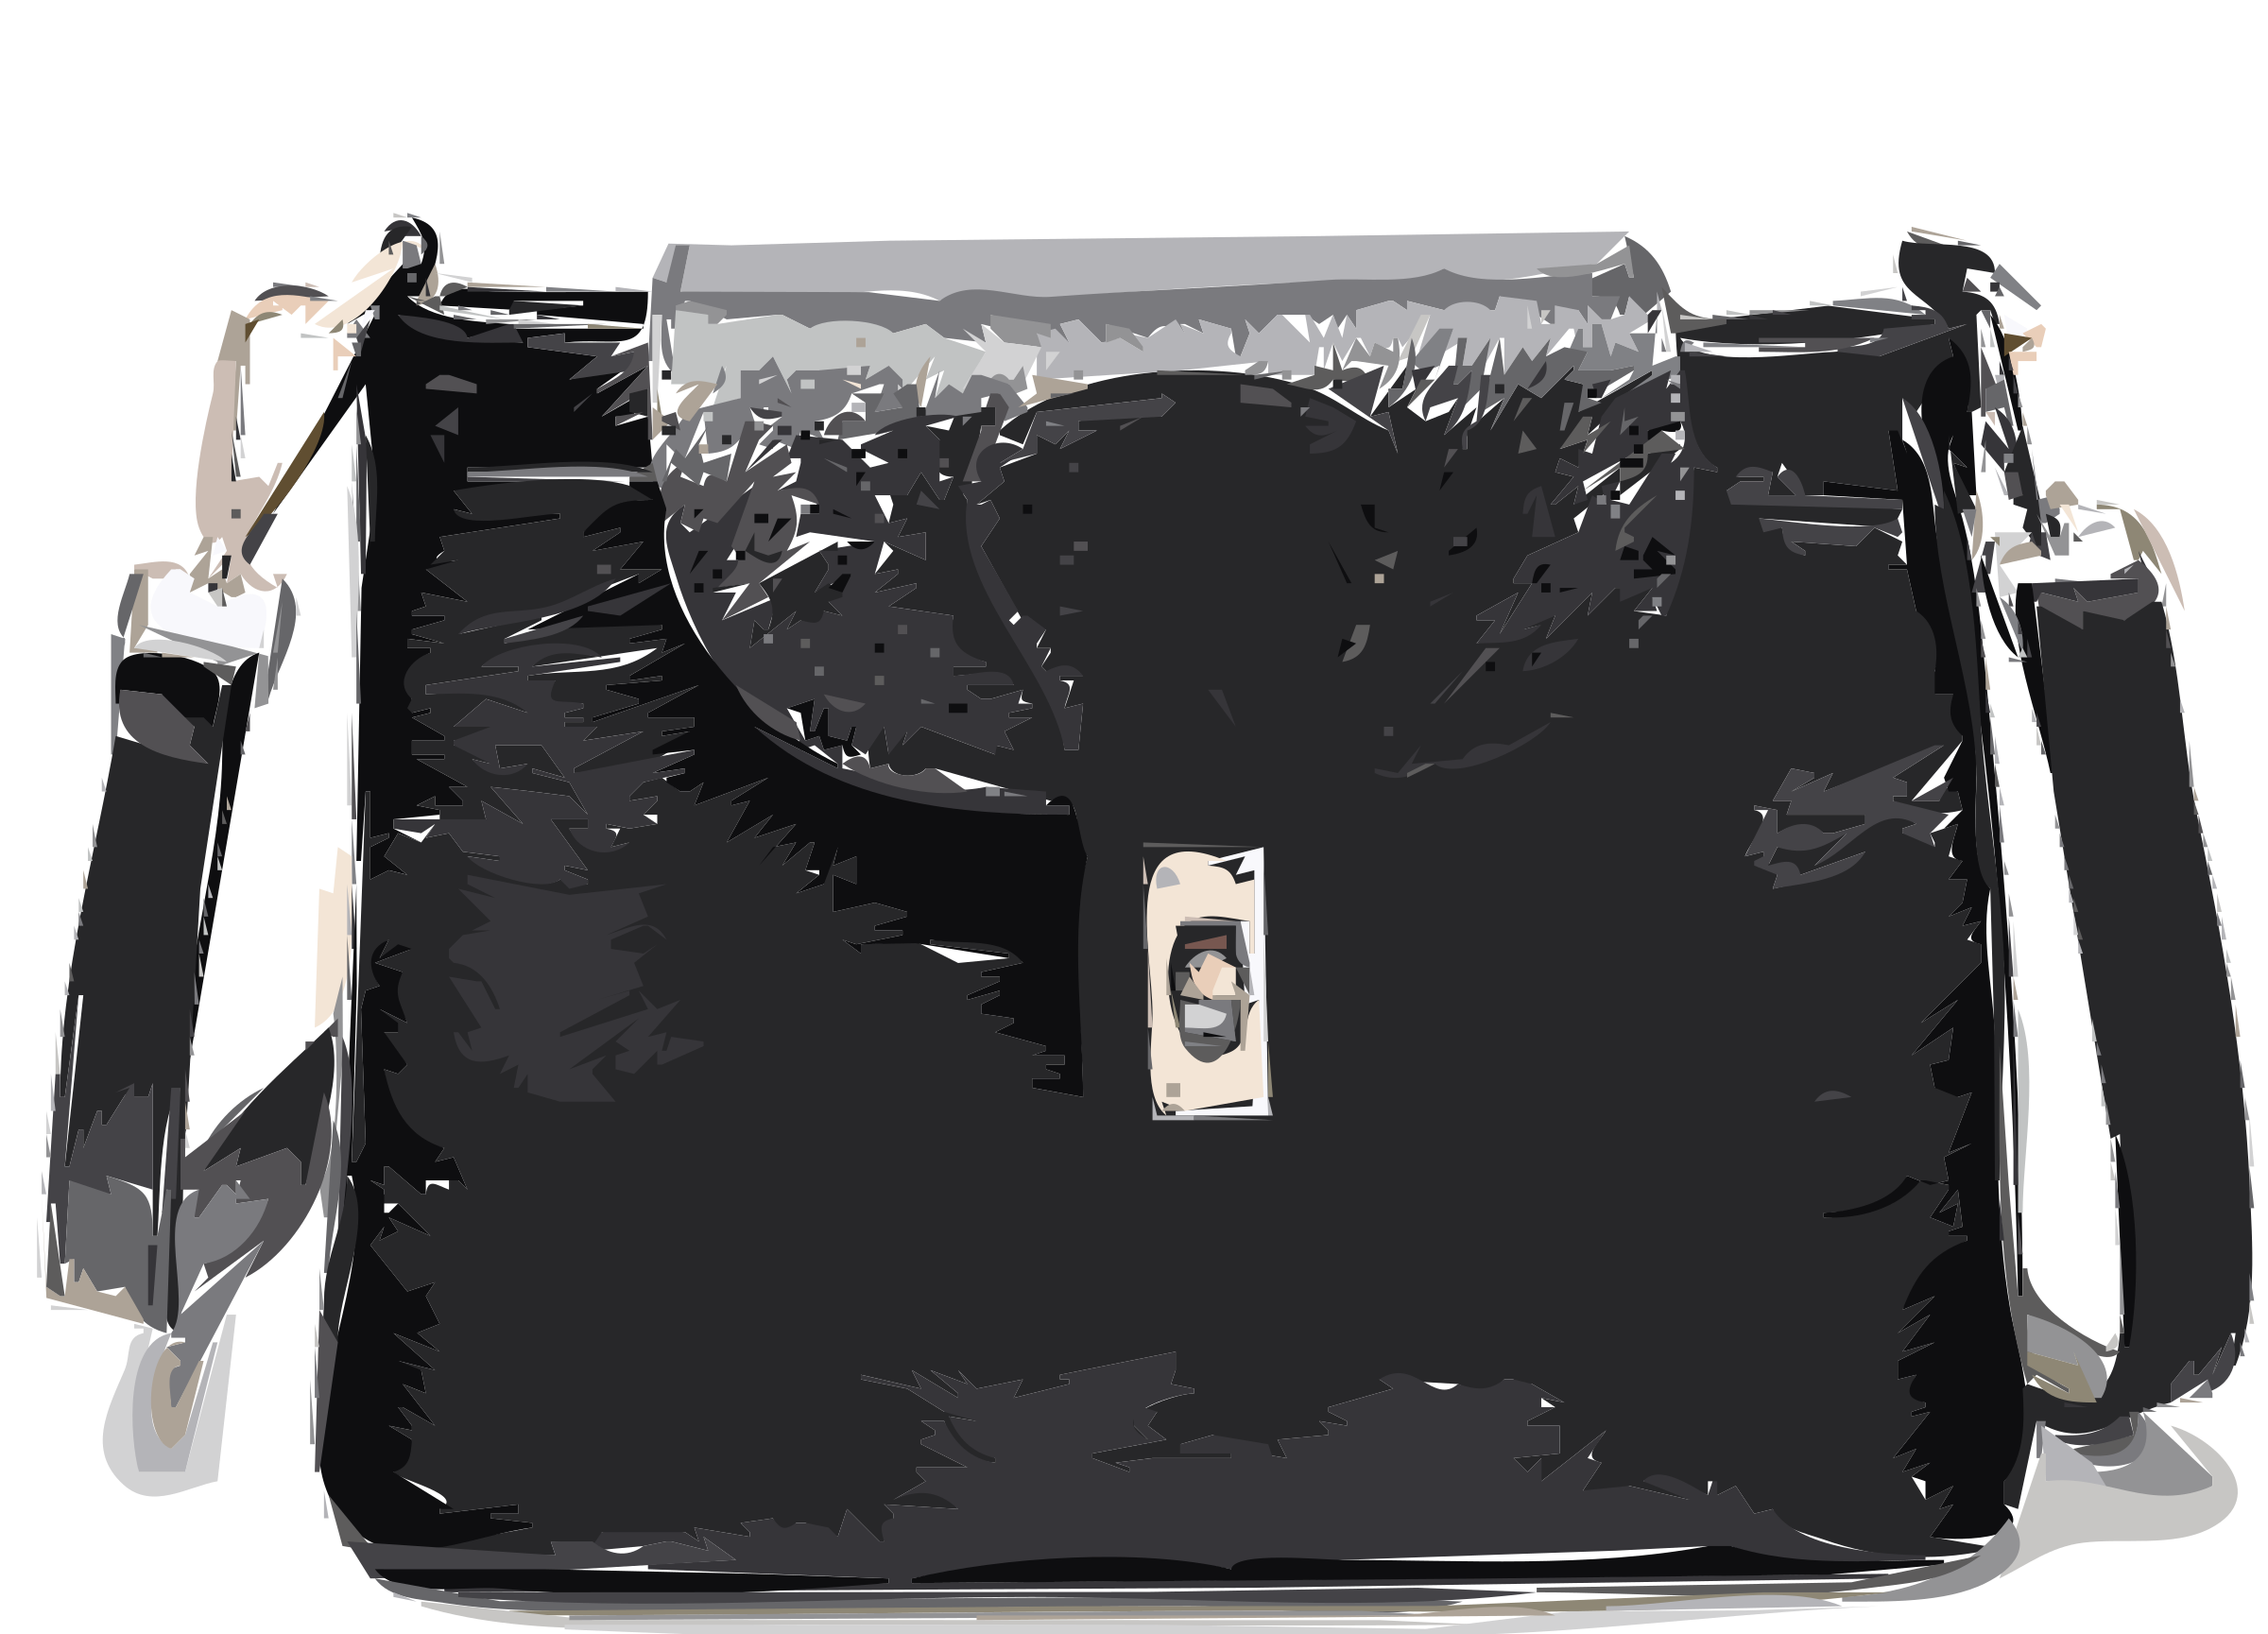 Girly Handbags Clip Art Set – Daily Art Hub // Graphics, Alphabets & SVG